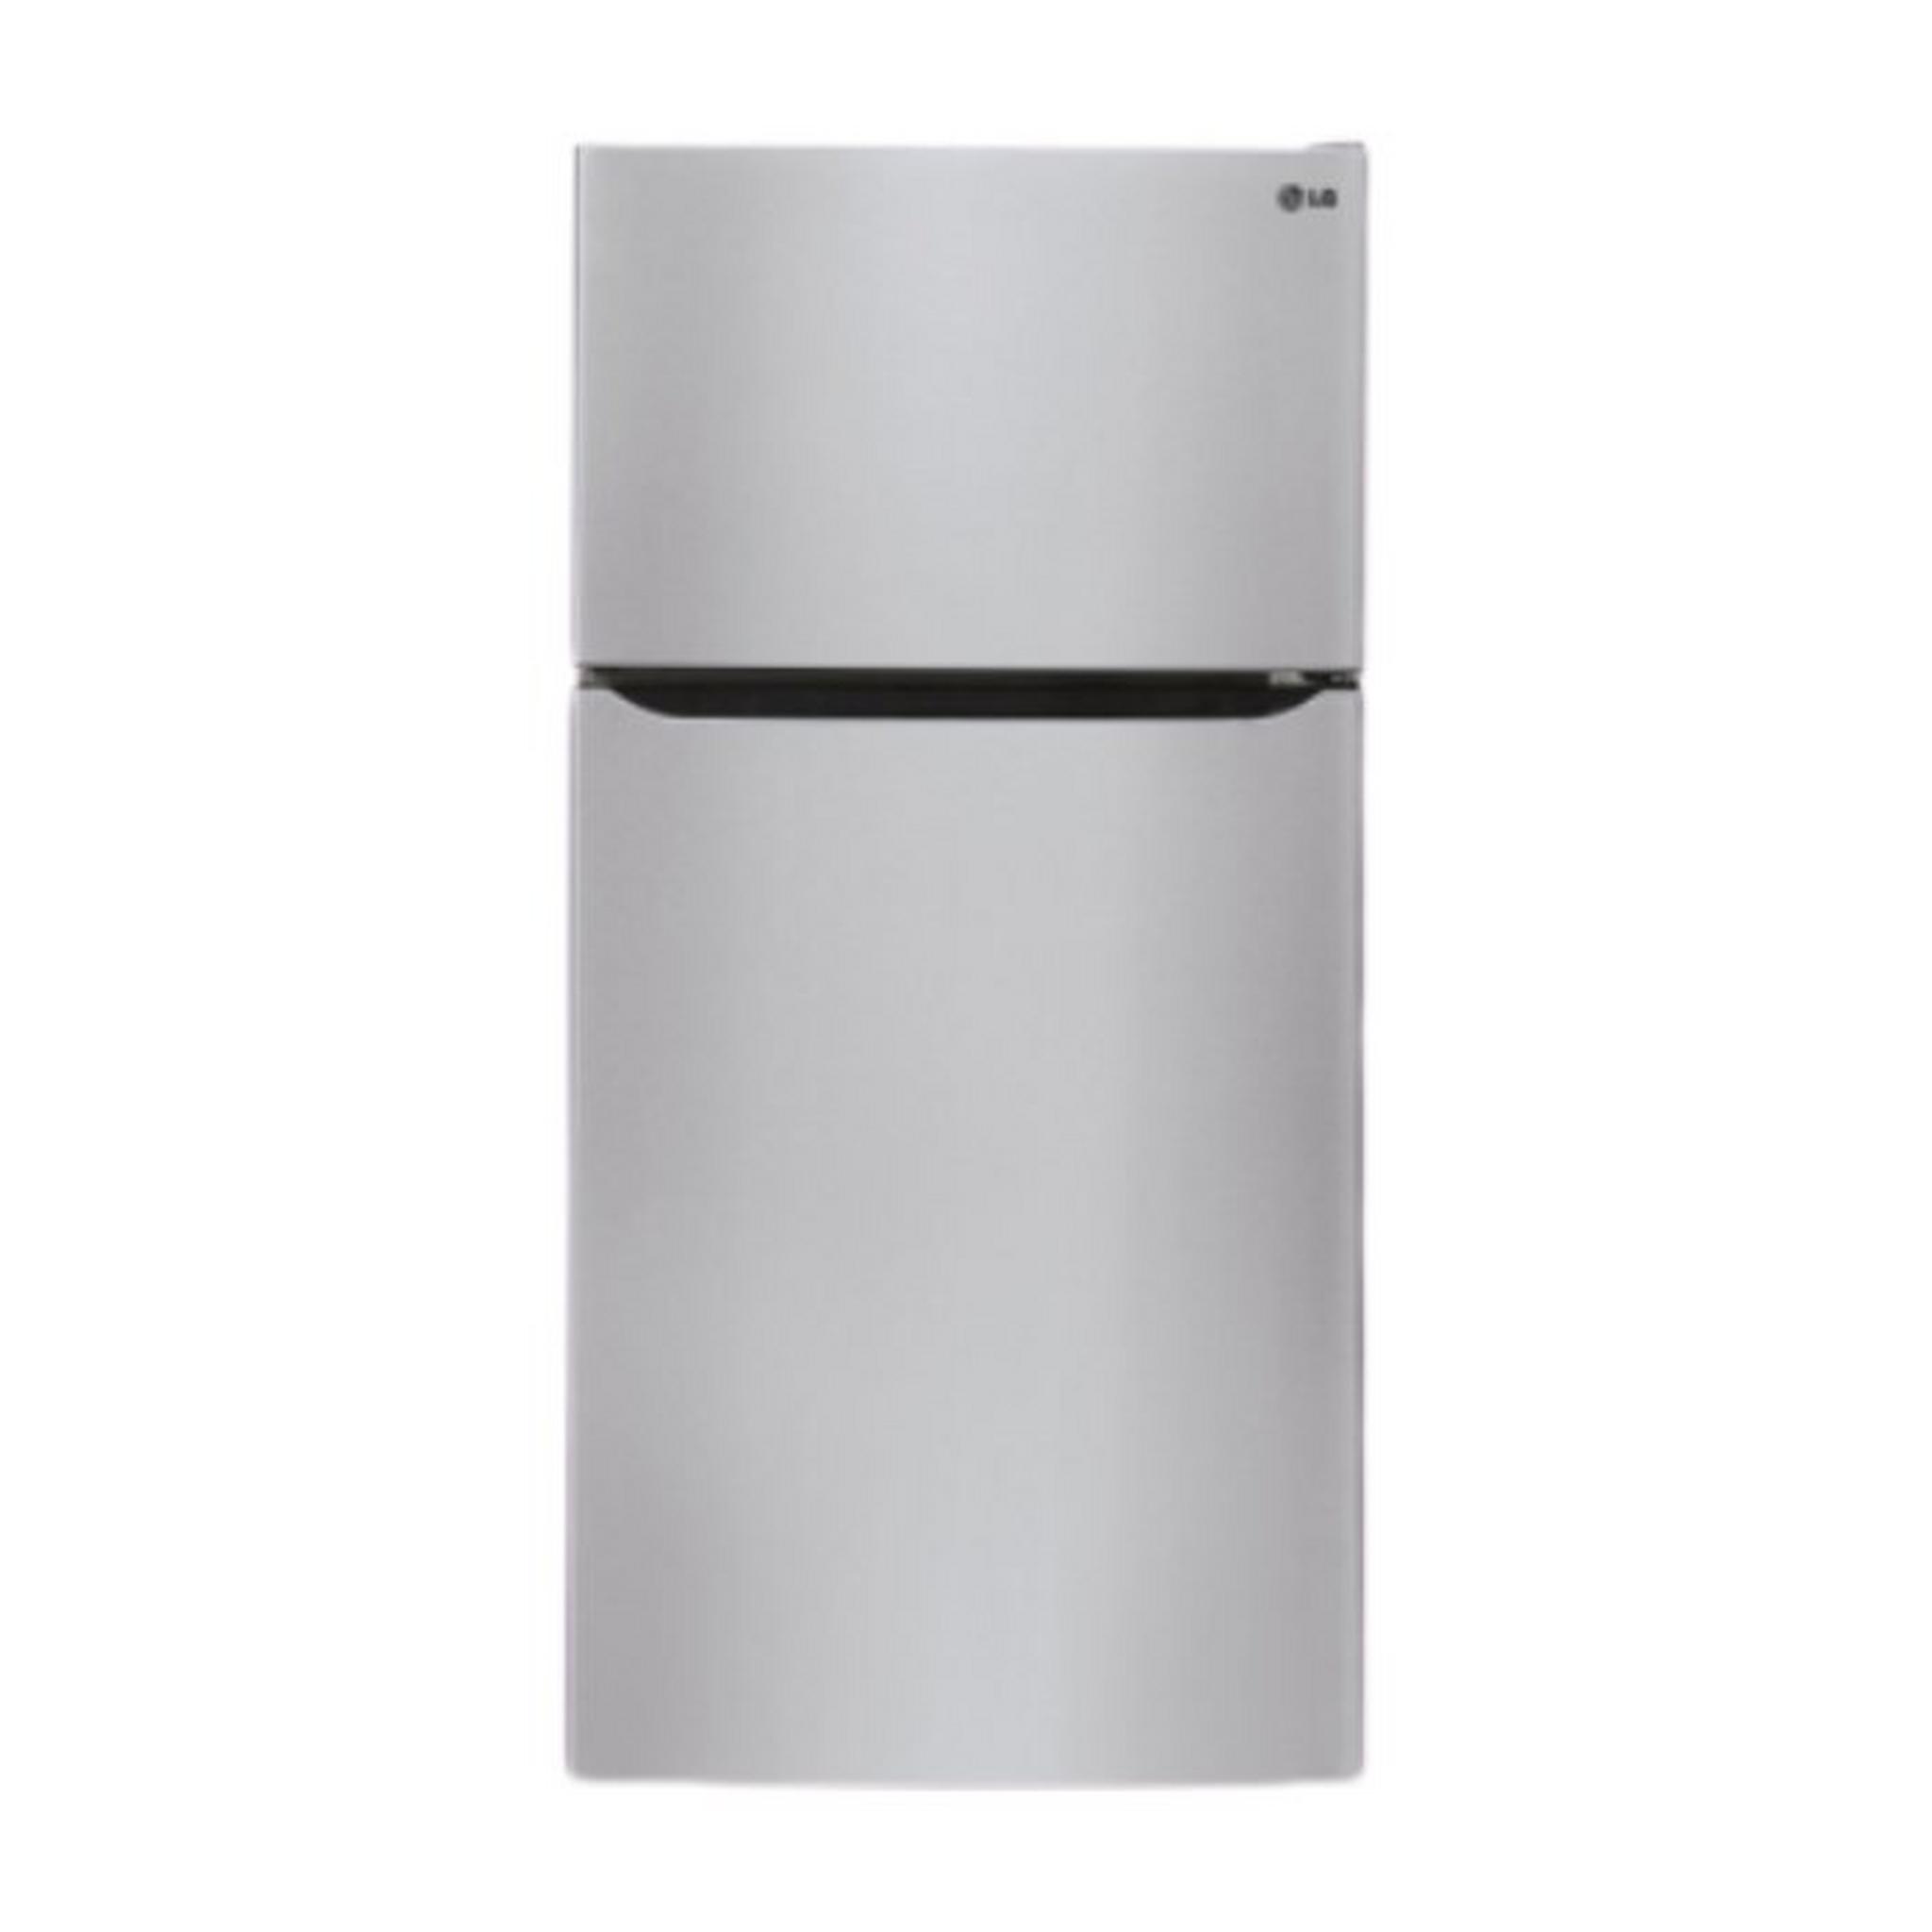 LG 23 CFT Top Mount Refrigerator - Silver (LT24CBBVLN)